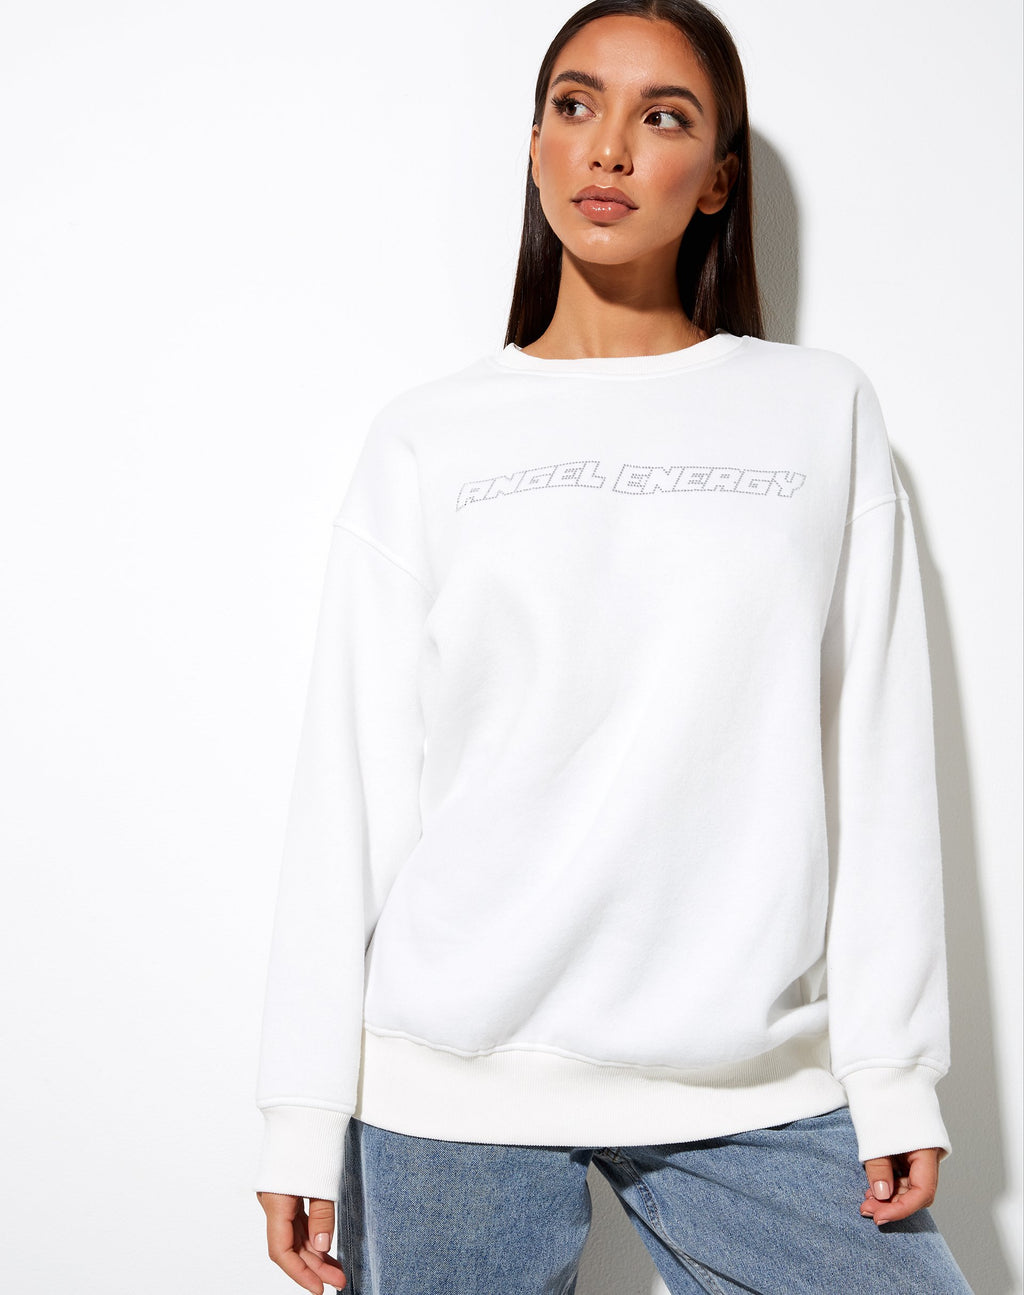 Glowee Sweatshirt in Warm White 'Angel Energy' Hotfix